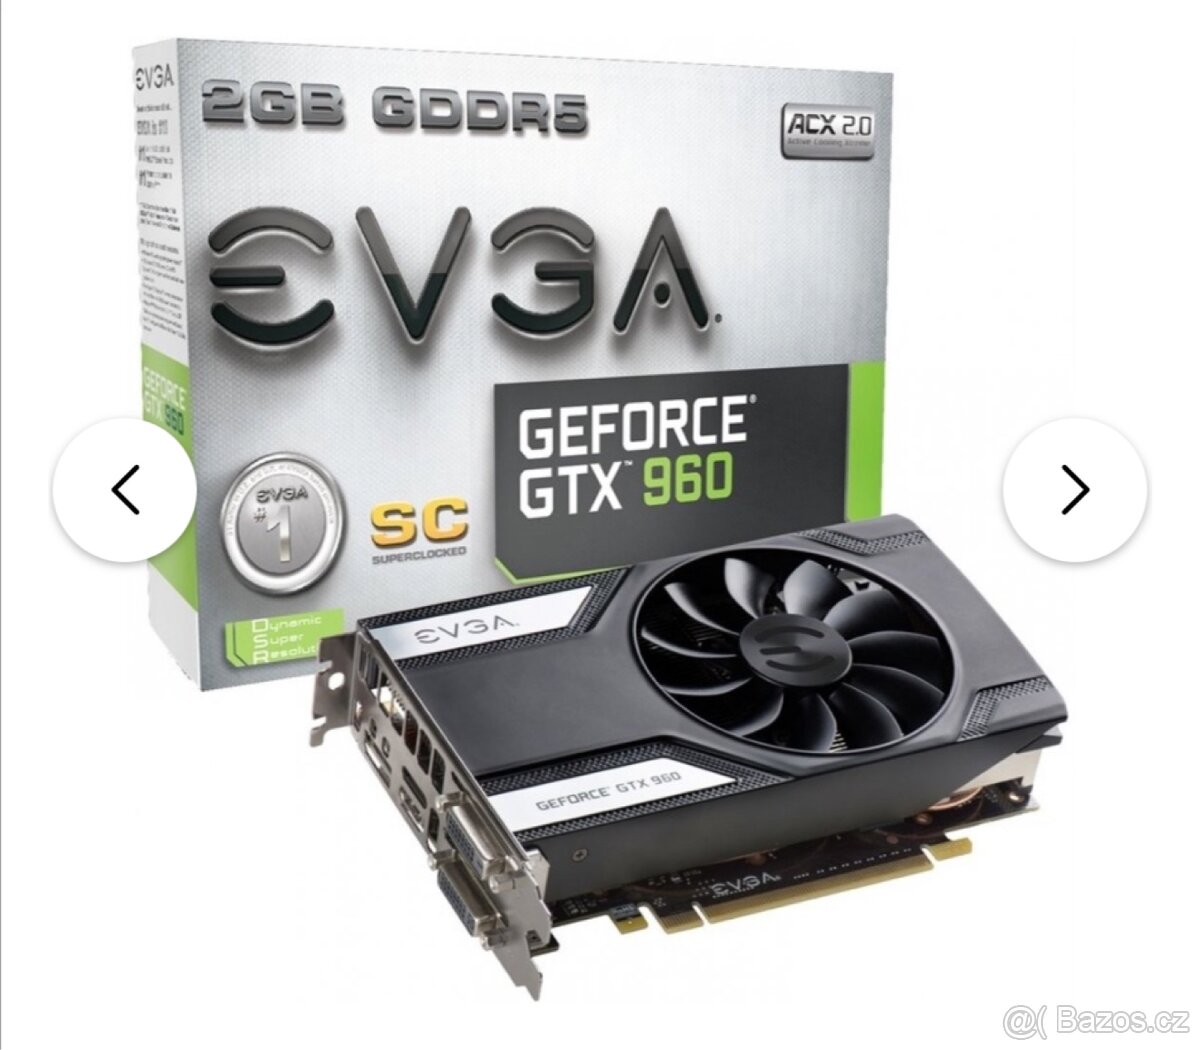 EVGA Geforce GTX 960 SC